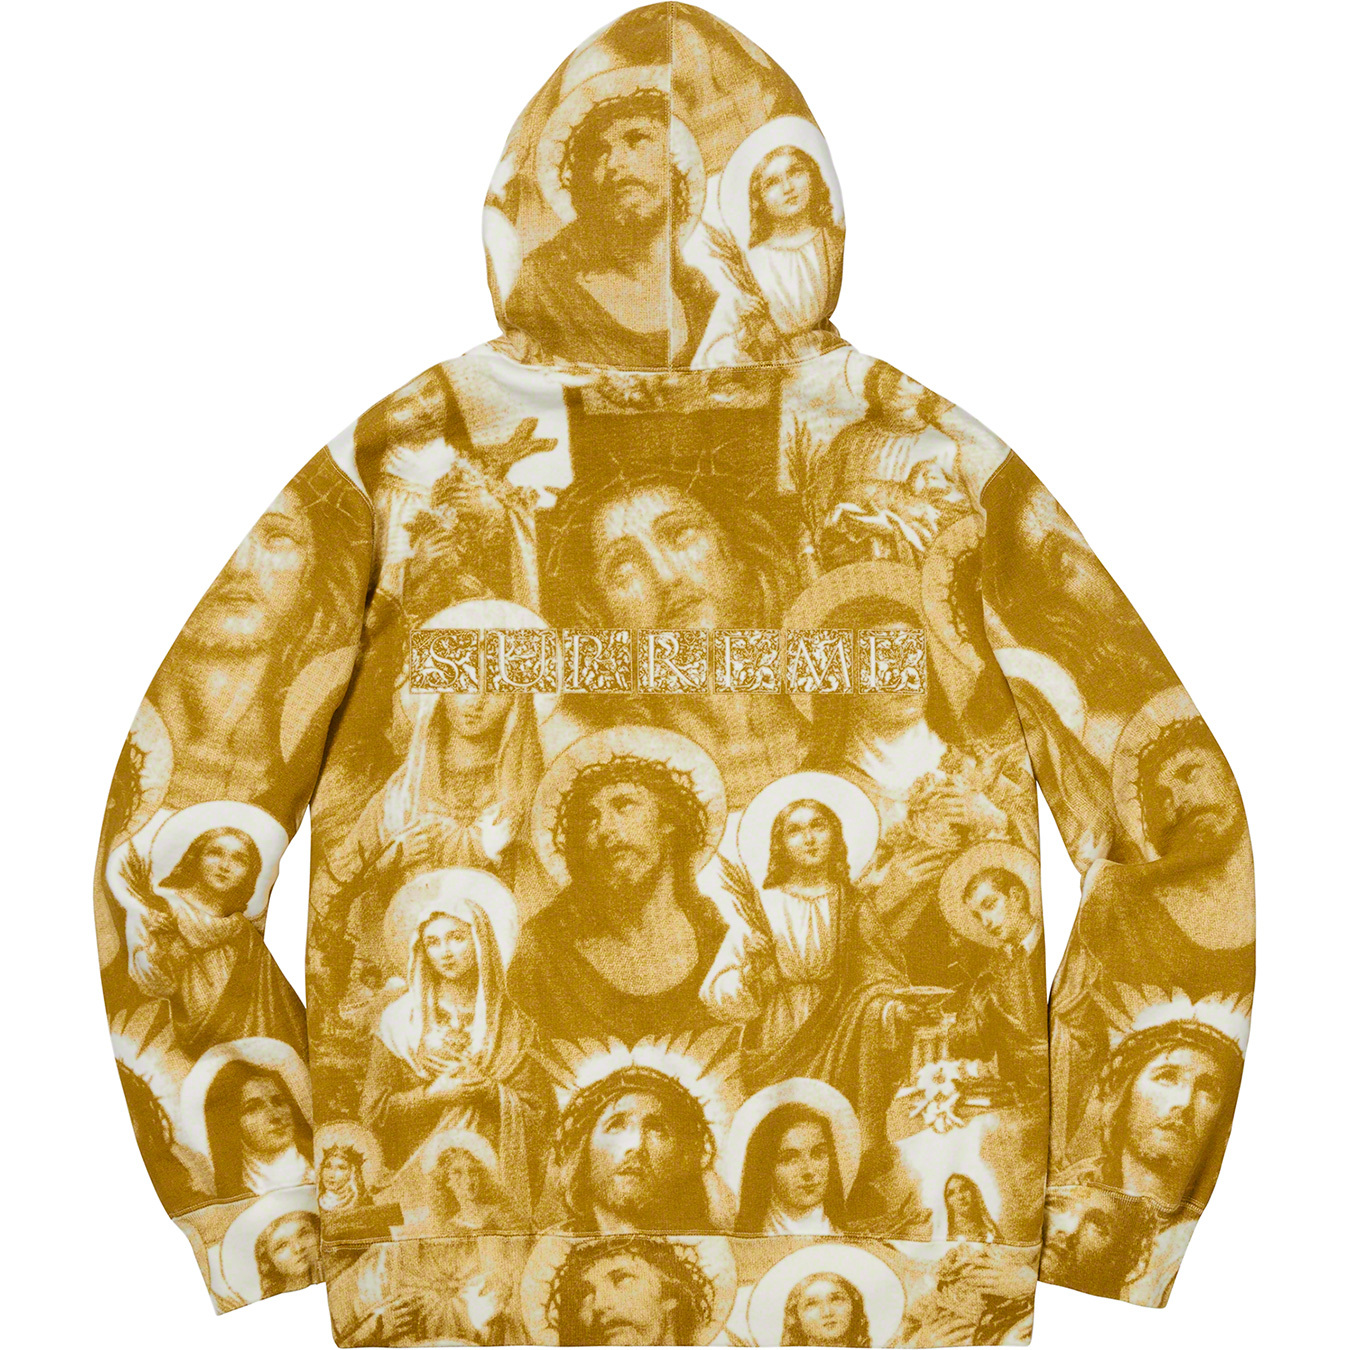 Jesus and Mary Hooded Sweatshirt - fall winter 2018 - Supreme